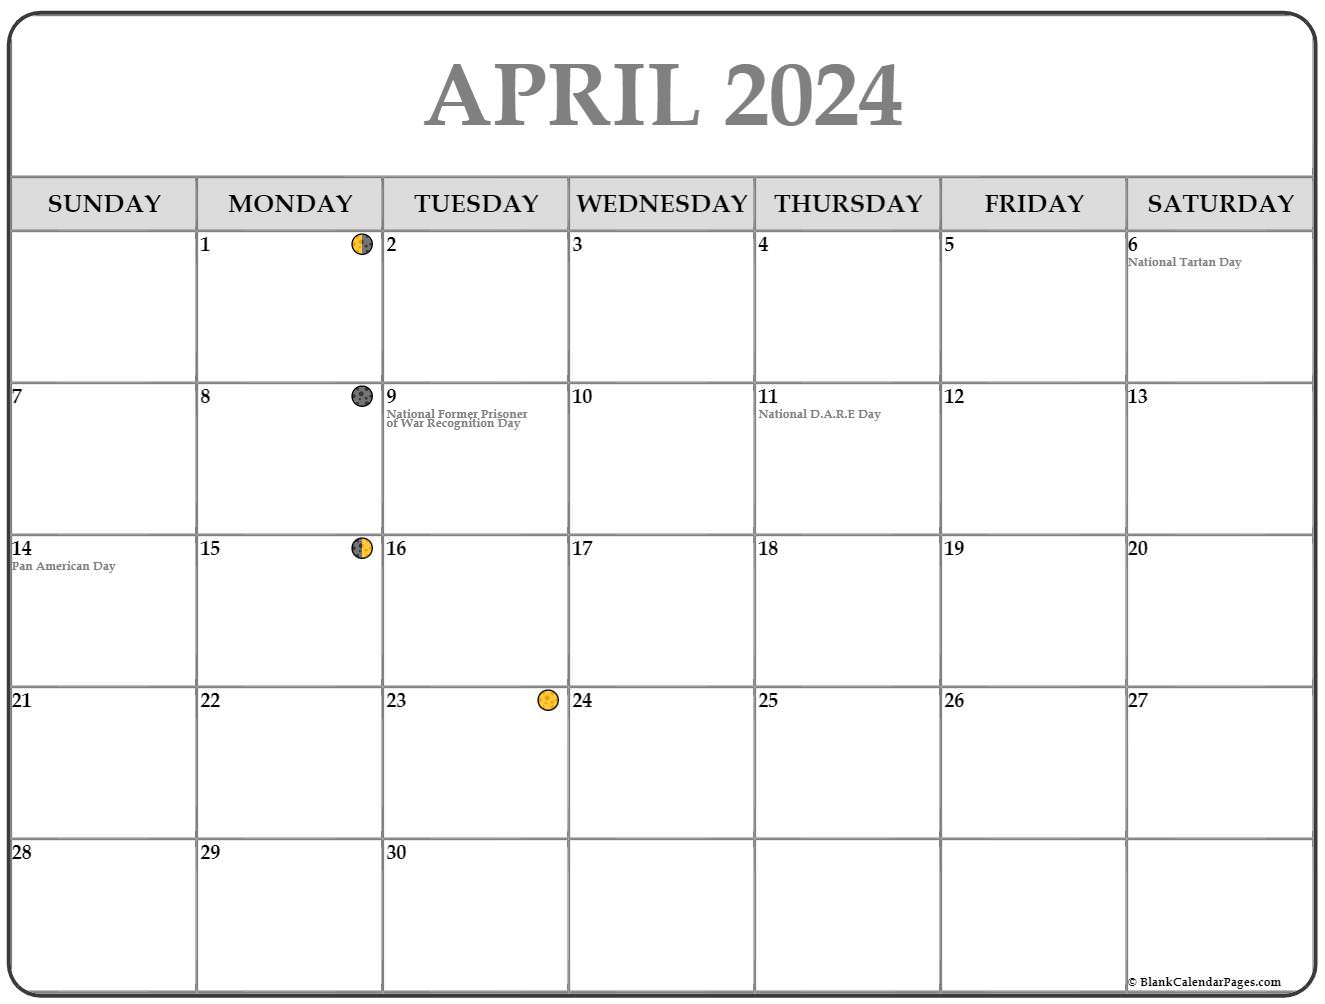 April 2021 calendar | free printable monthly calendars